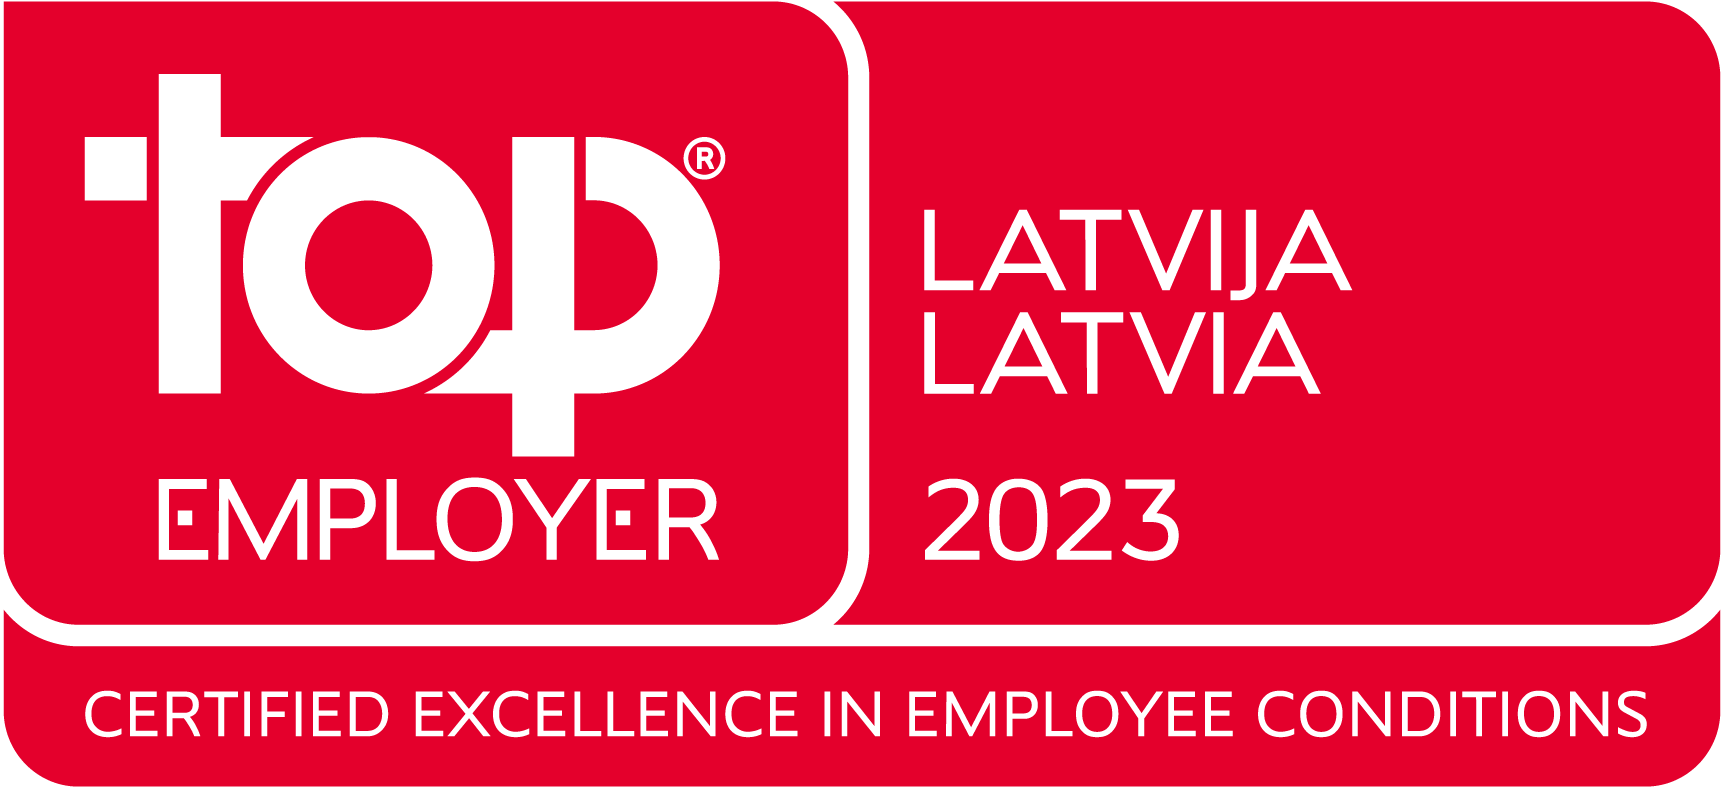 Top Employer Latvija